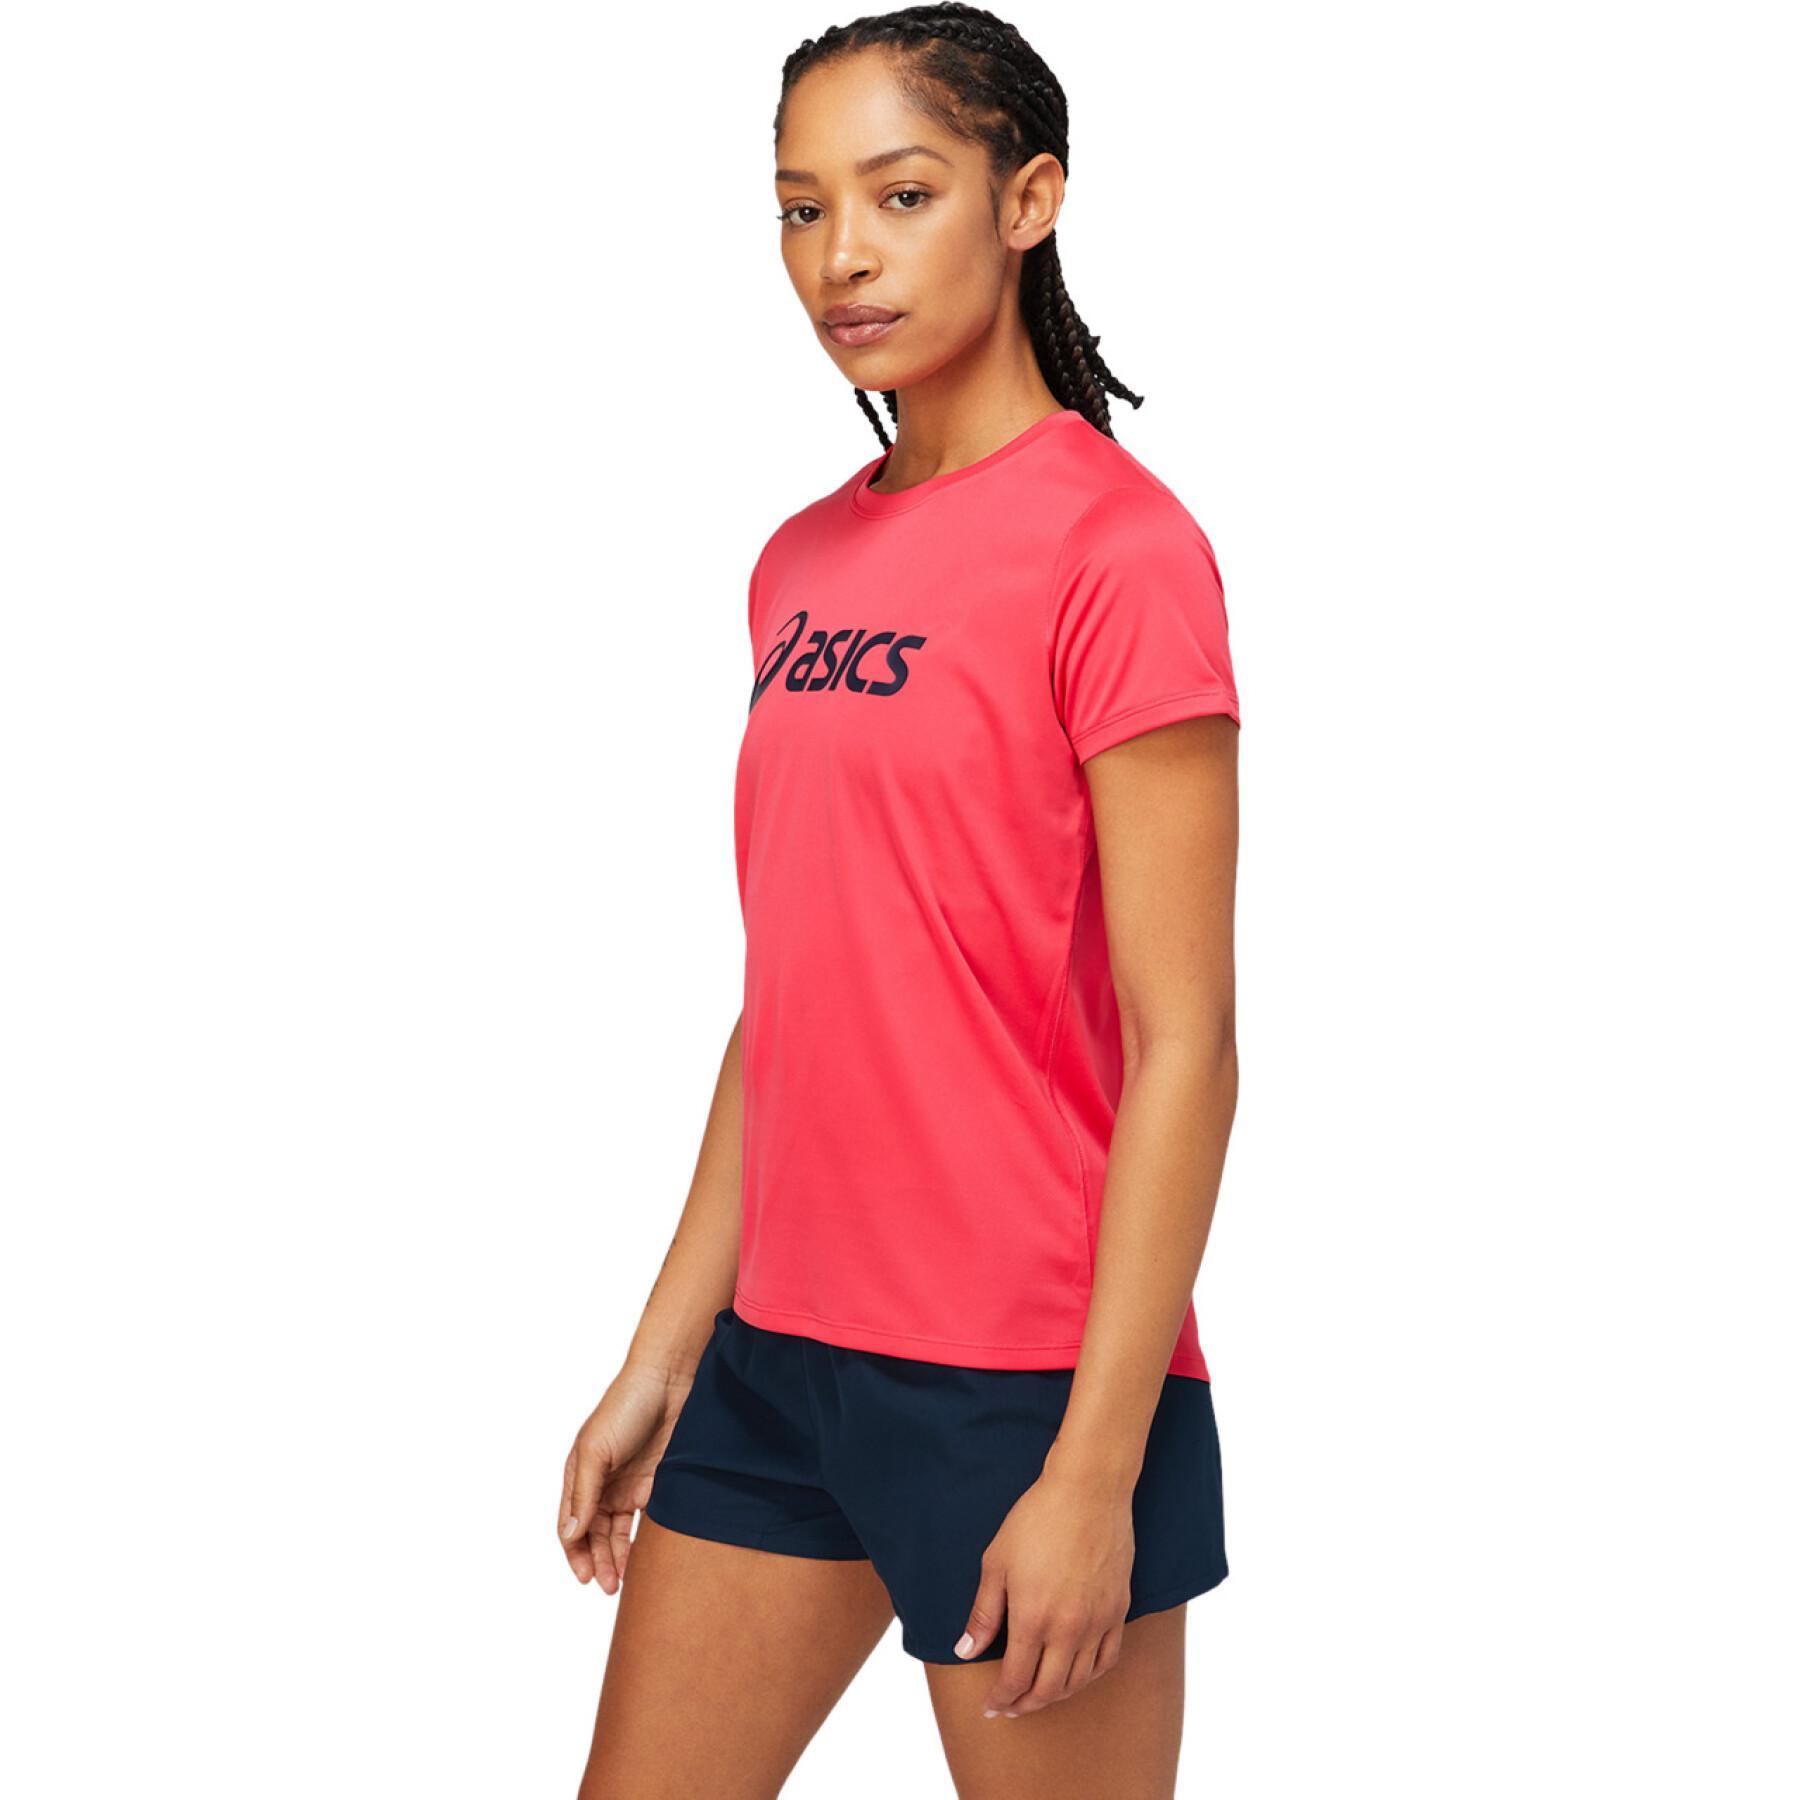 T-shirt mulher Asics Core